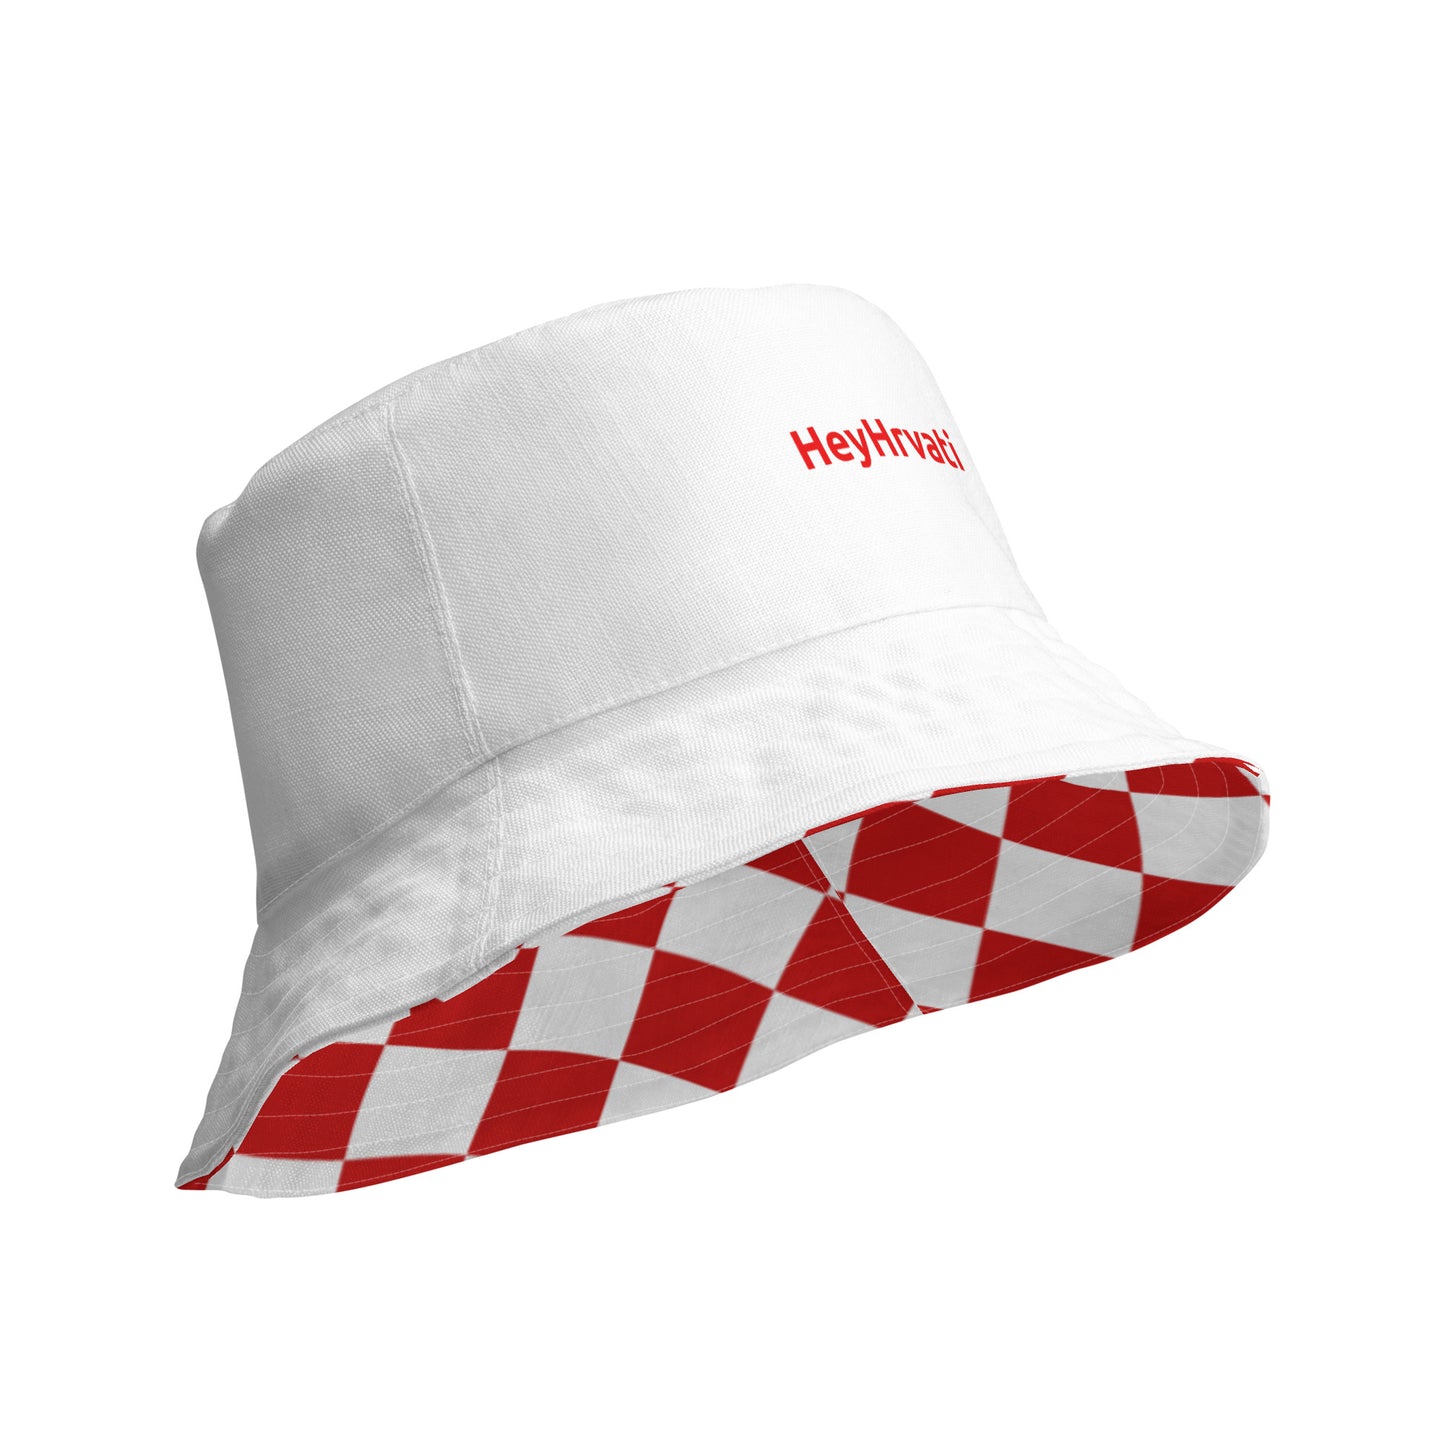 Checkered Reversible Bucket Hat